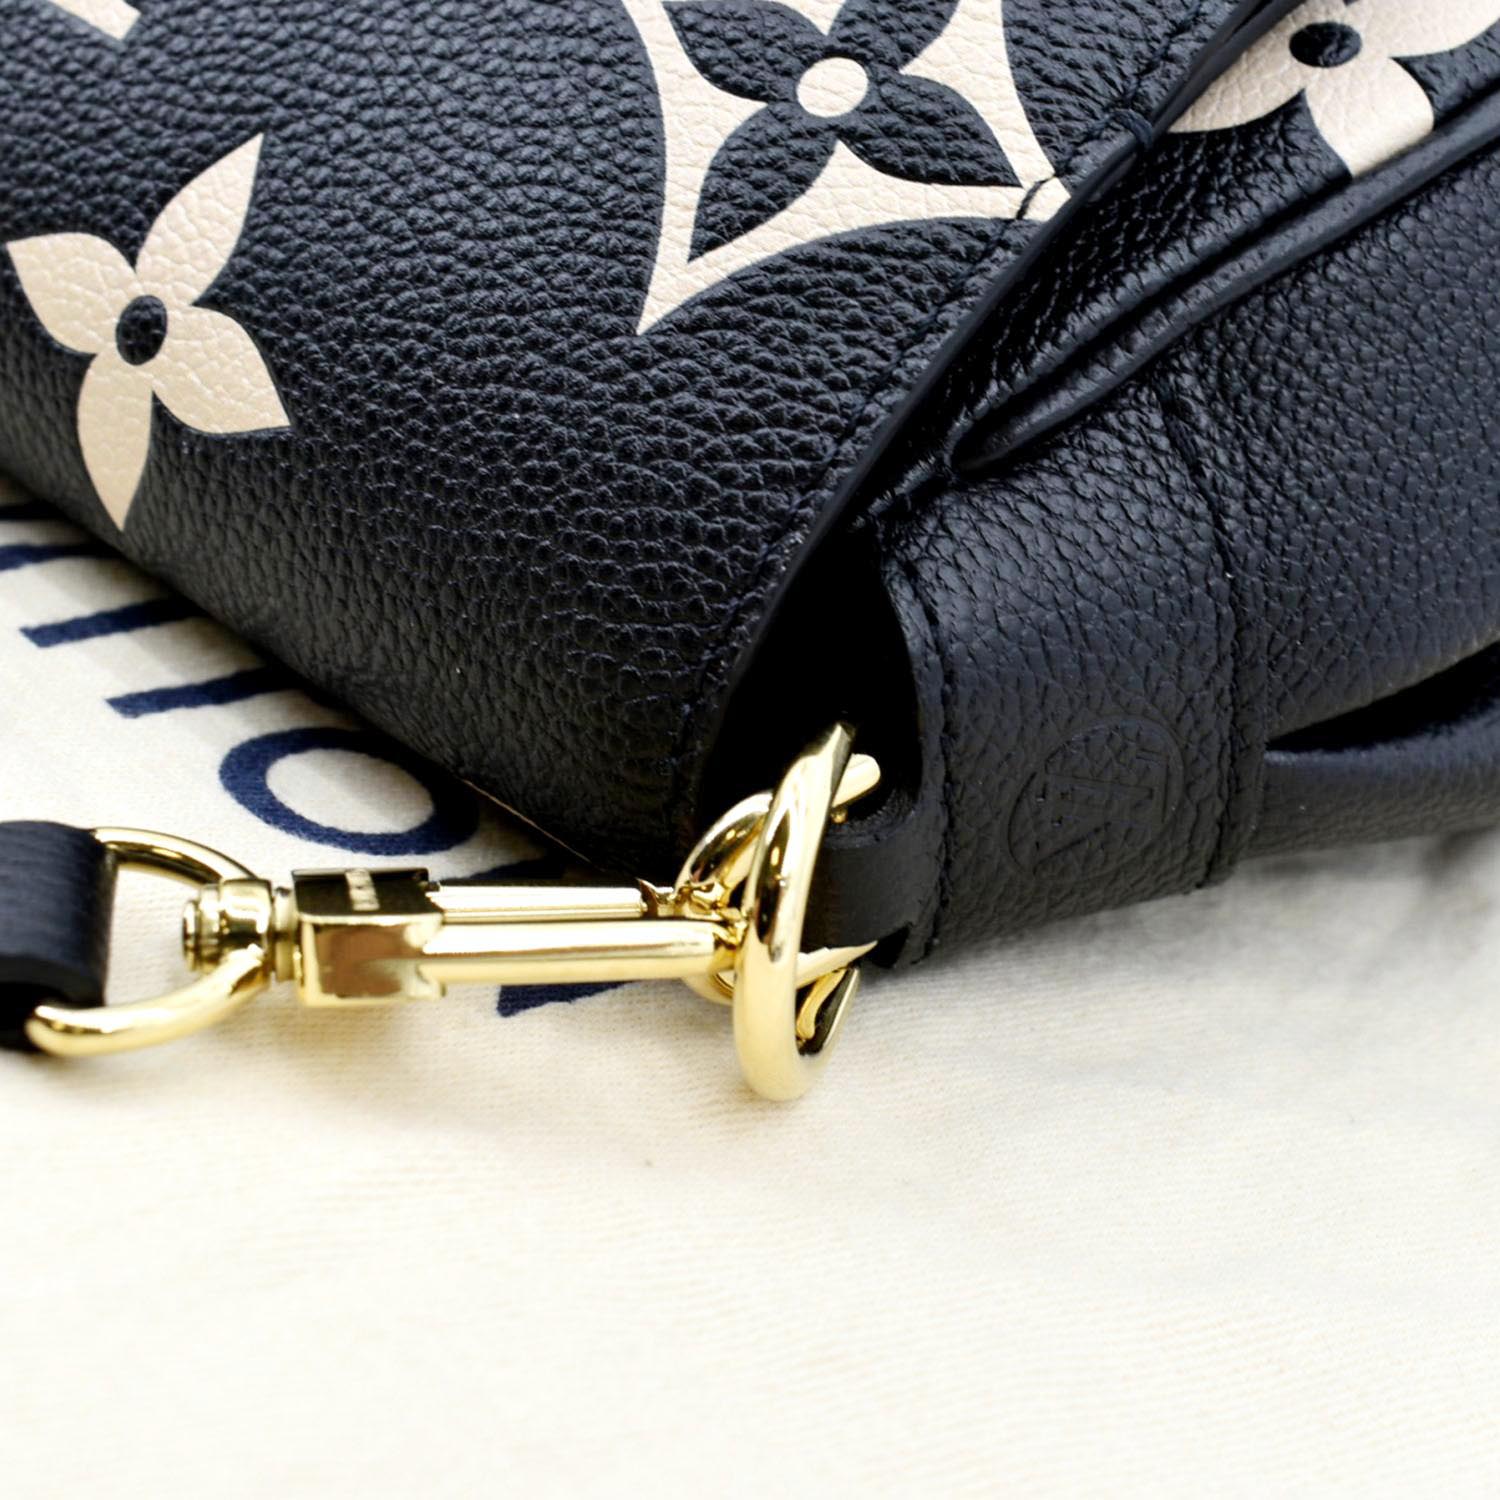 Louis Vuitton Monogram Empreinte Favourite Bag